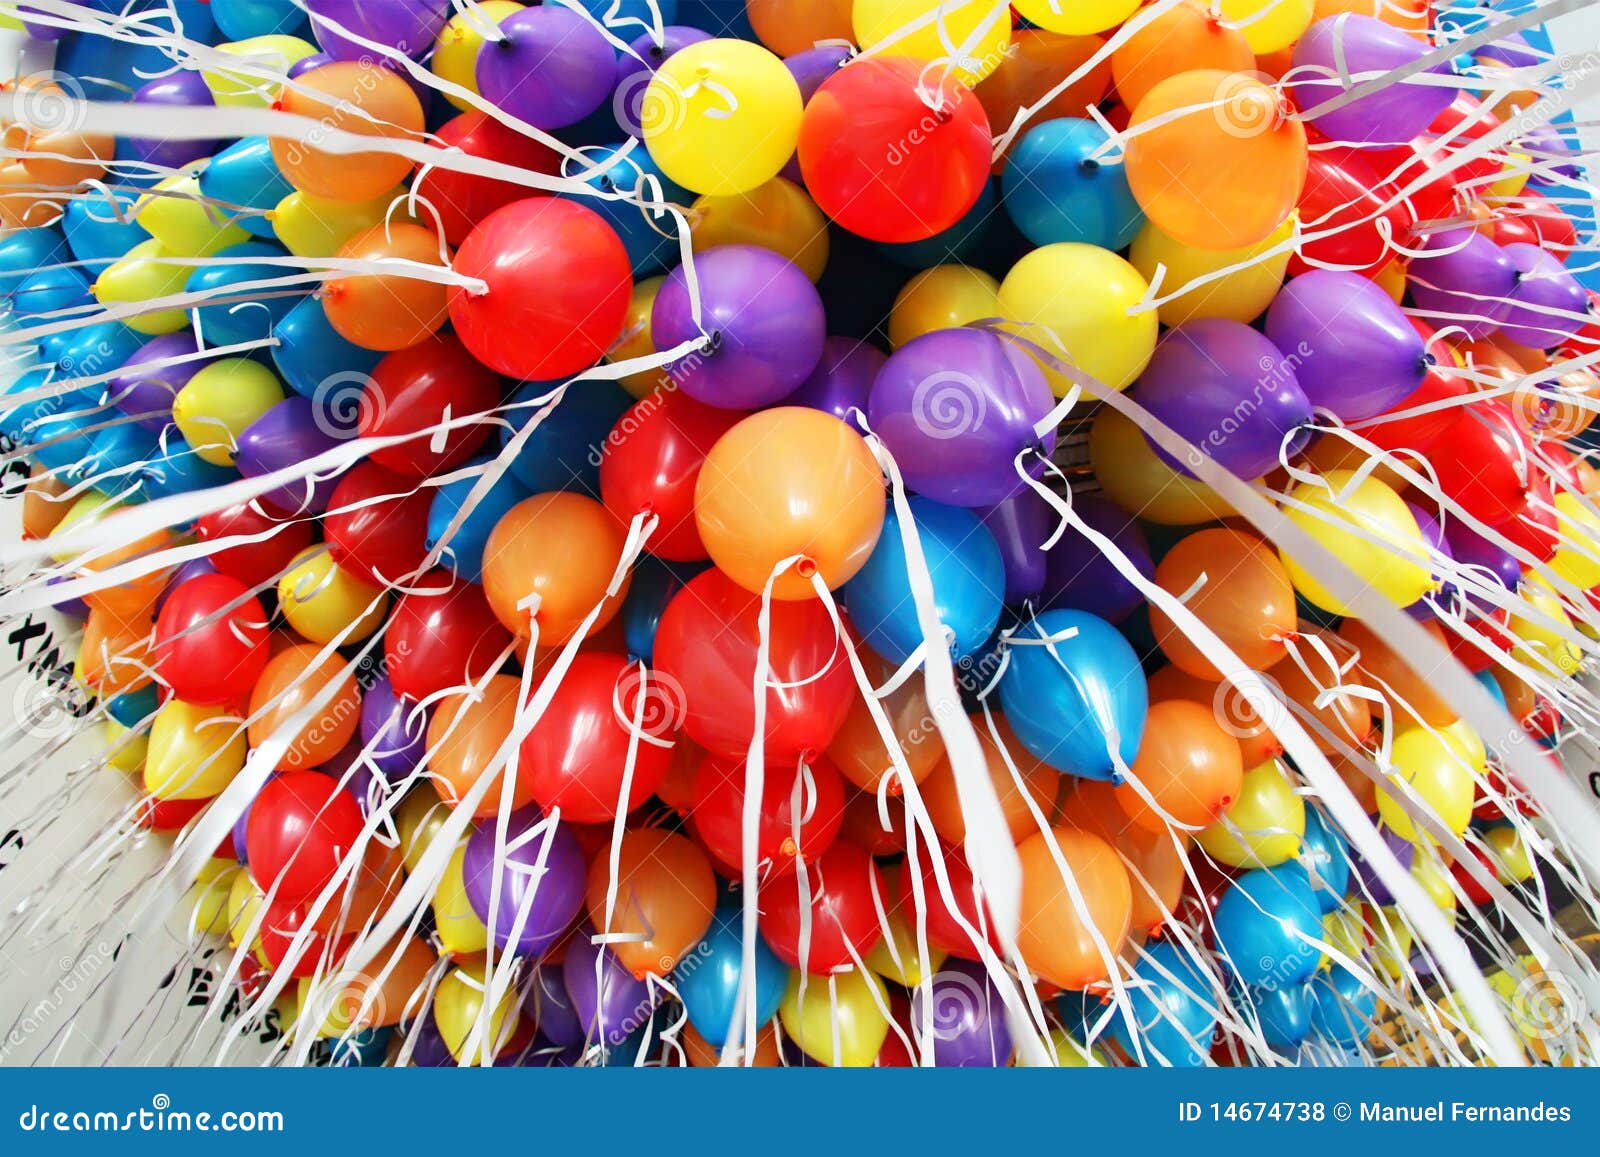 lots-balloons-14674738.jpg